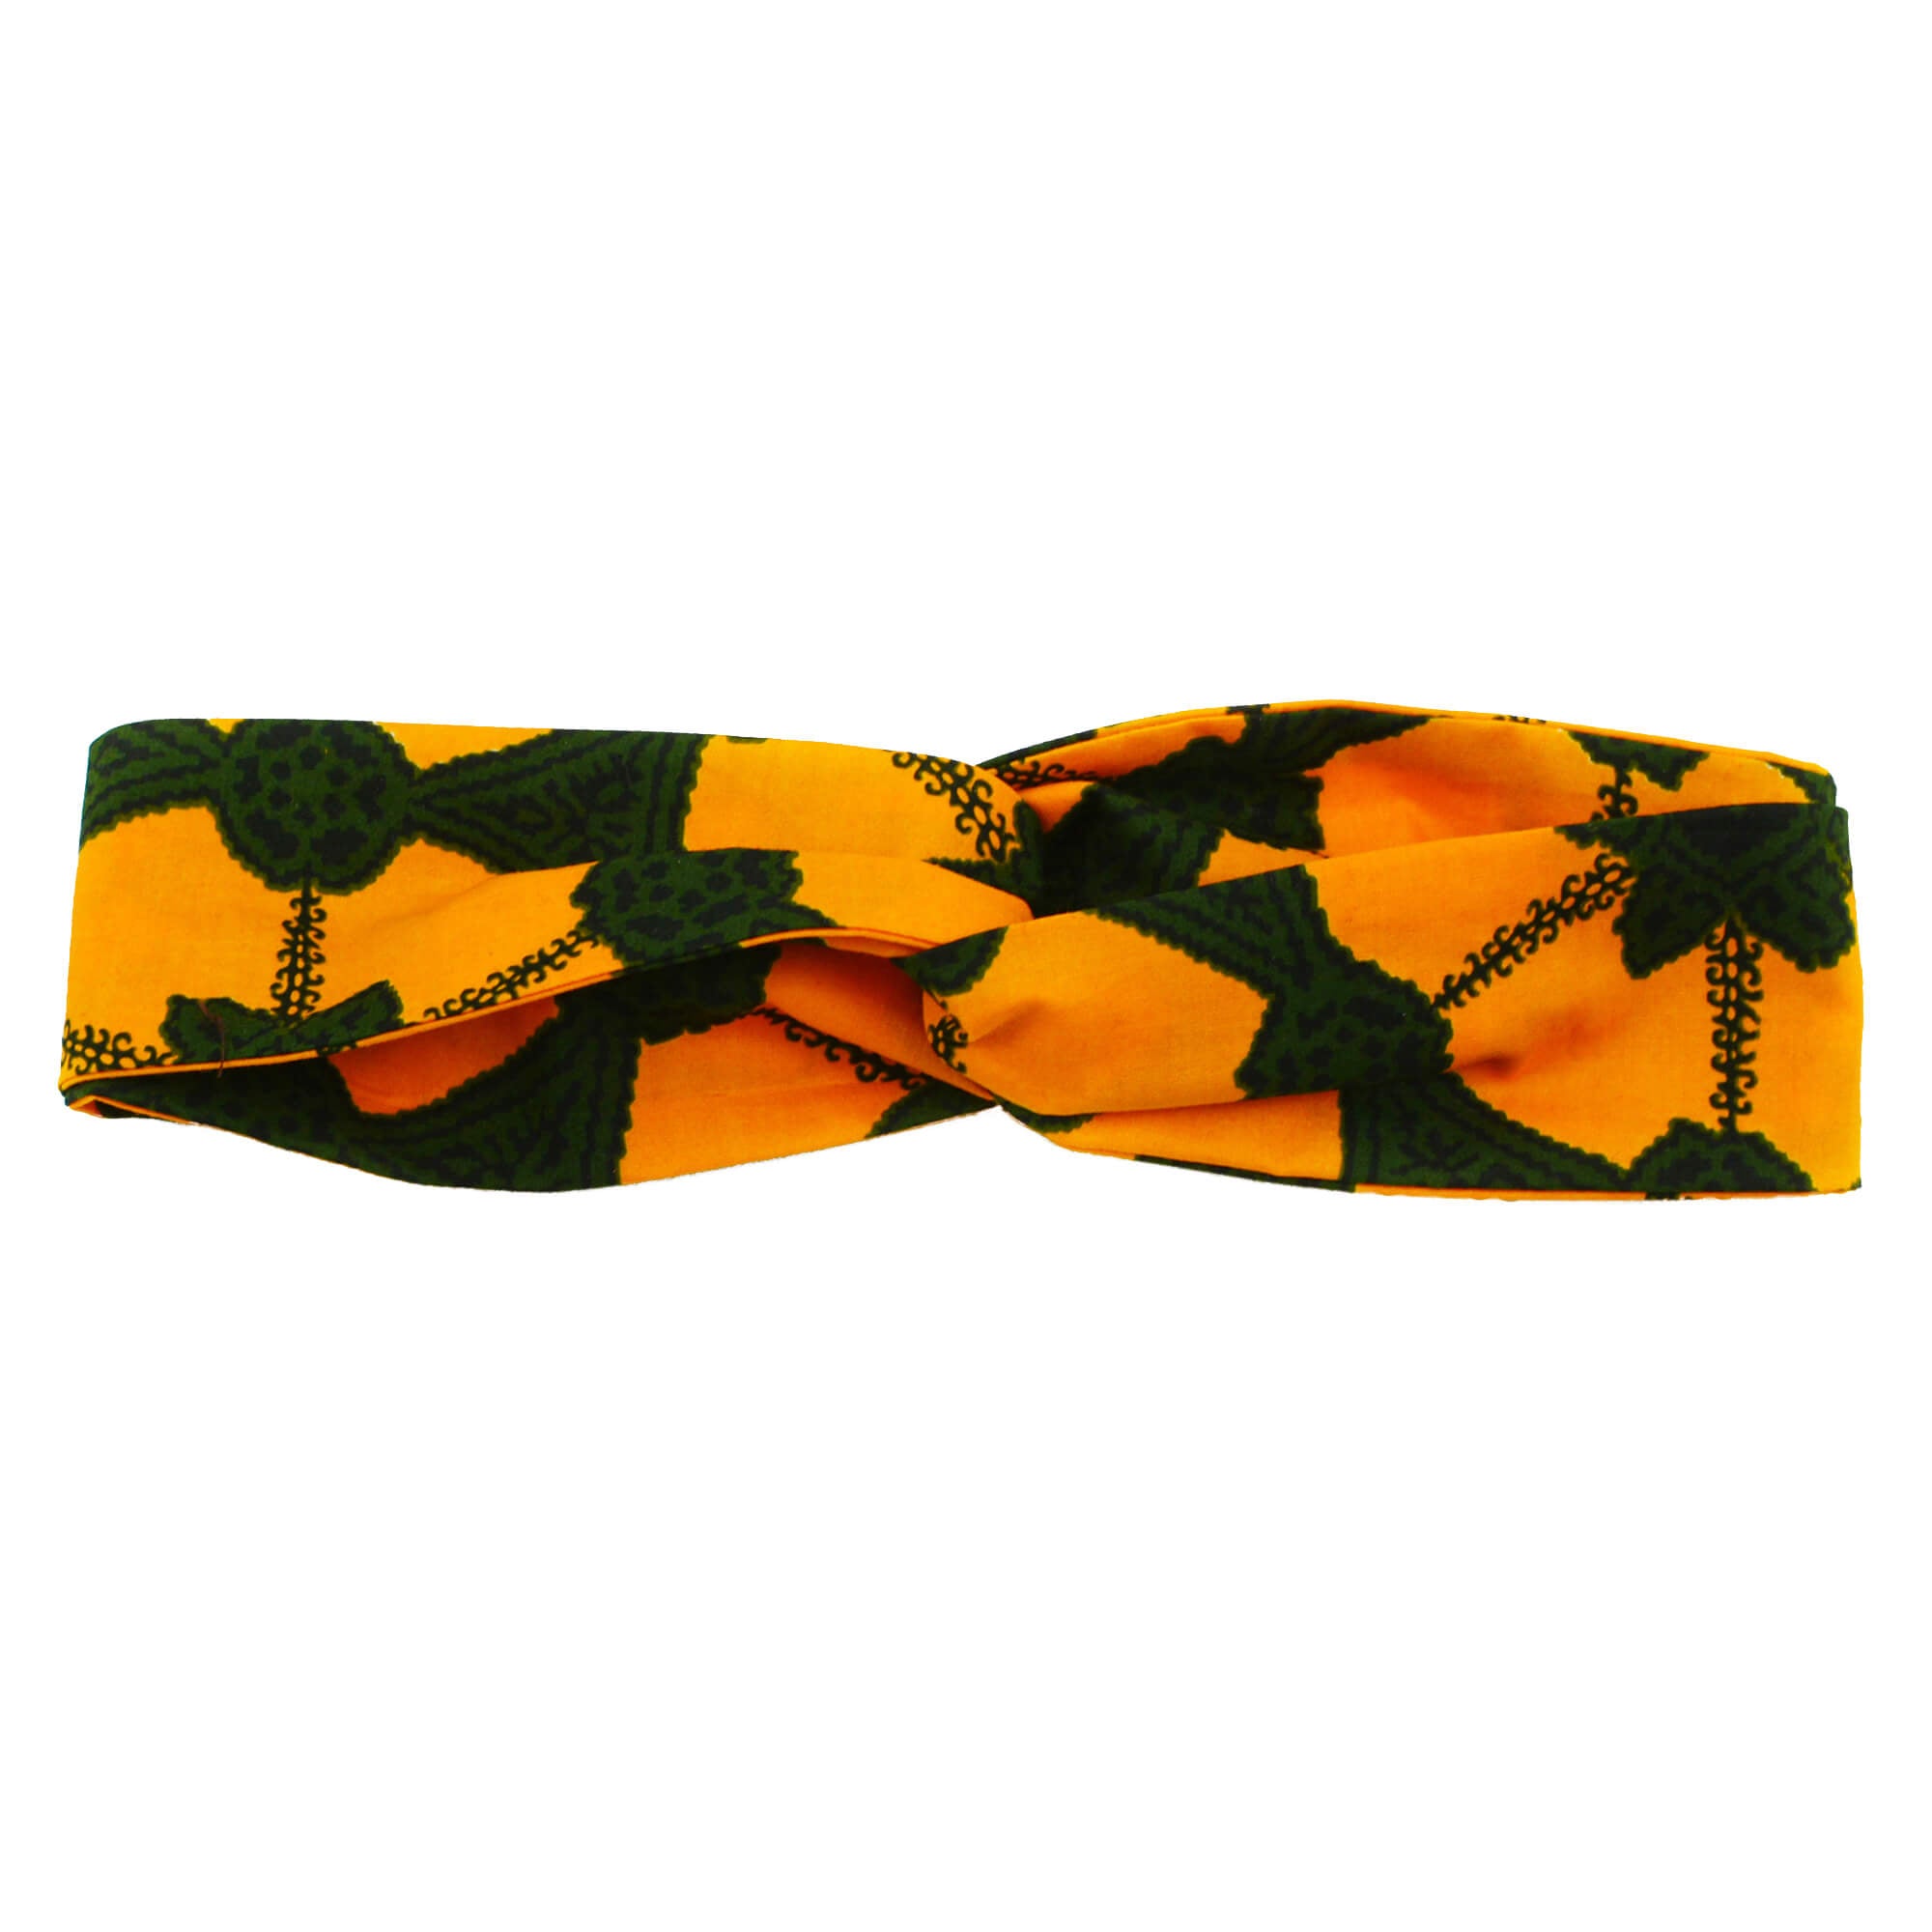 Criss Cross Headband - Colorful African Print